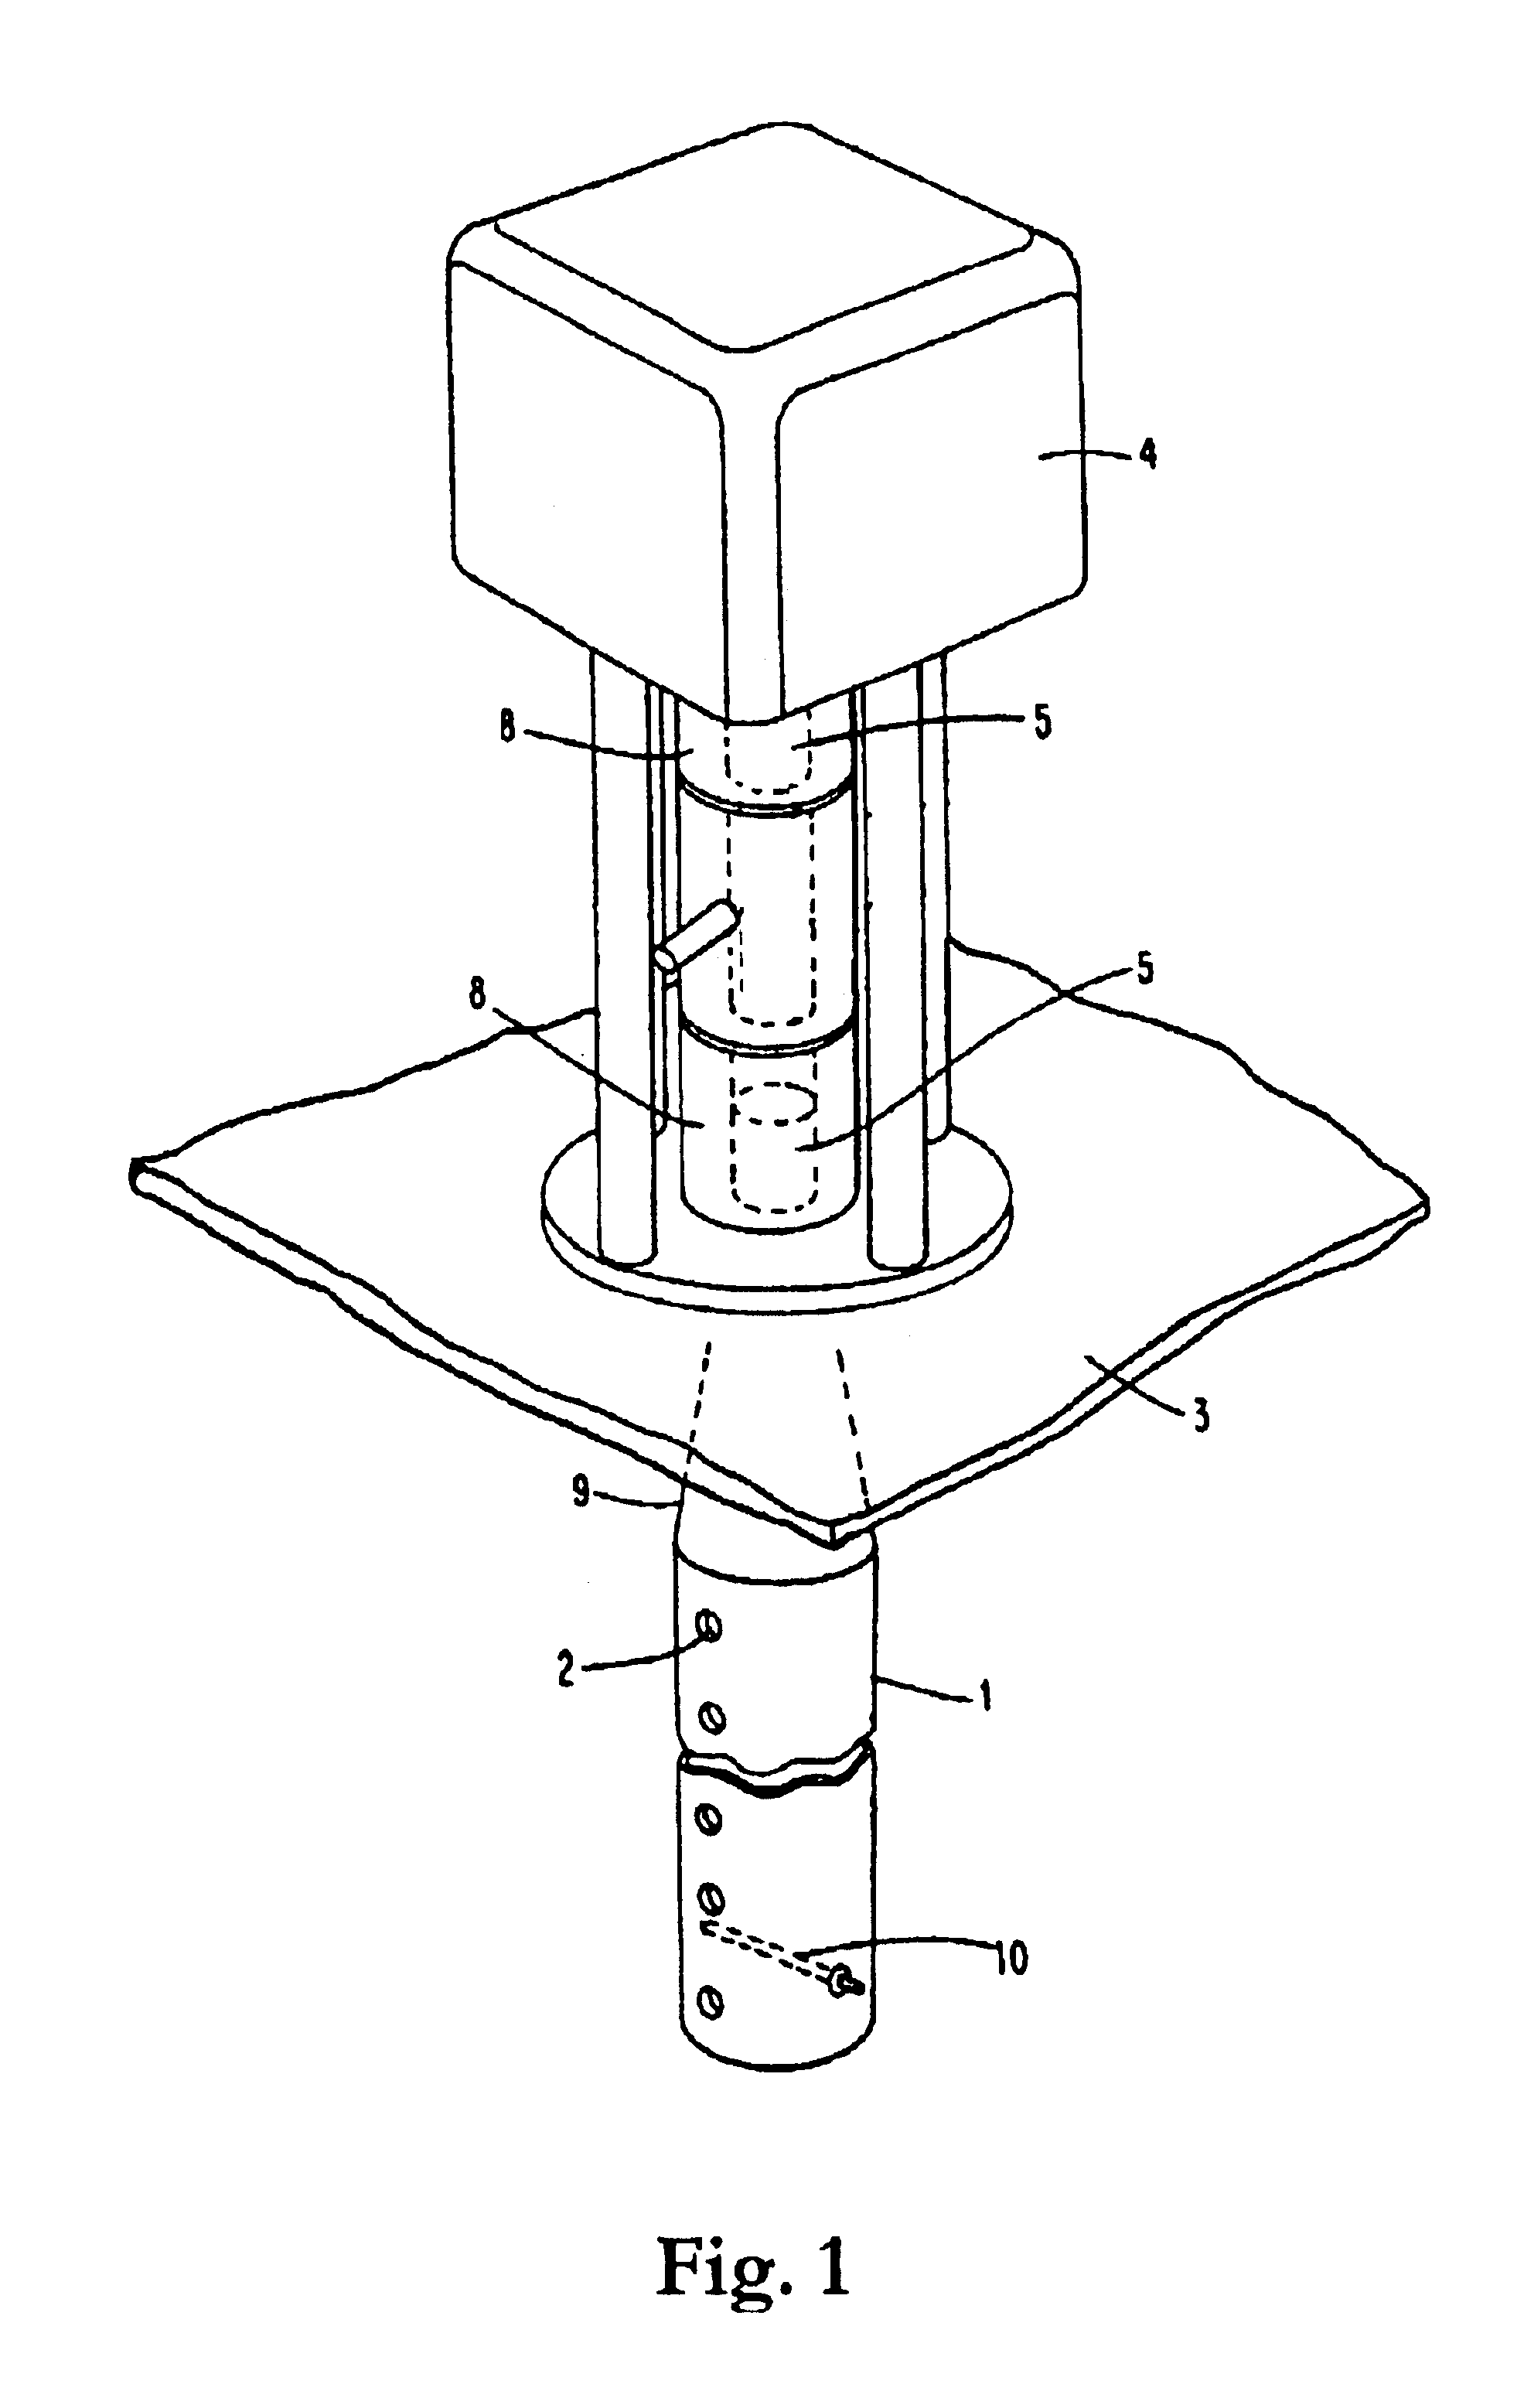 Apparatus and method for radar-based level gauging